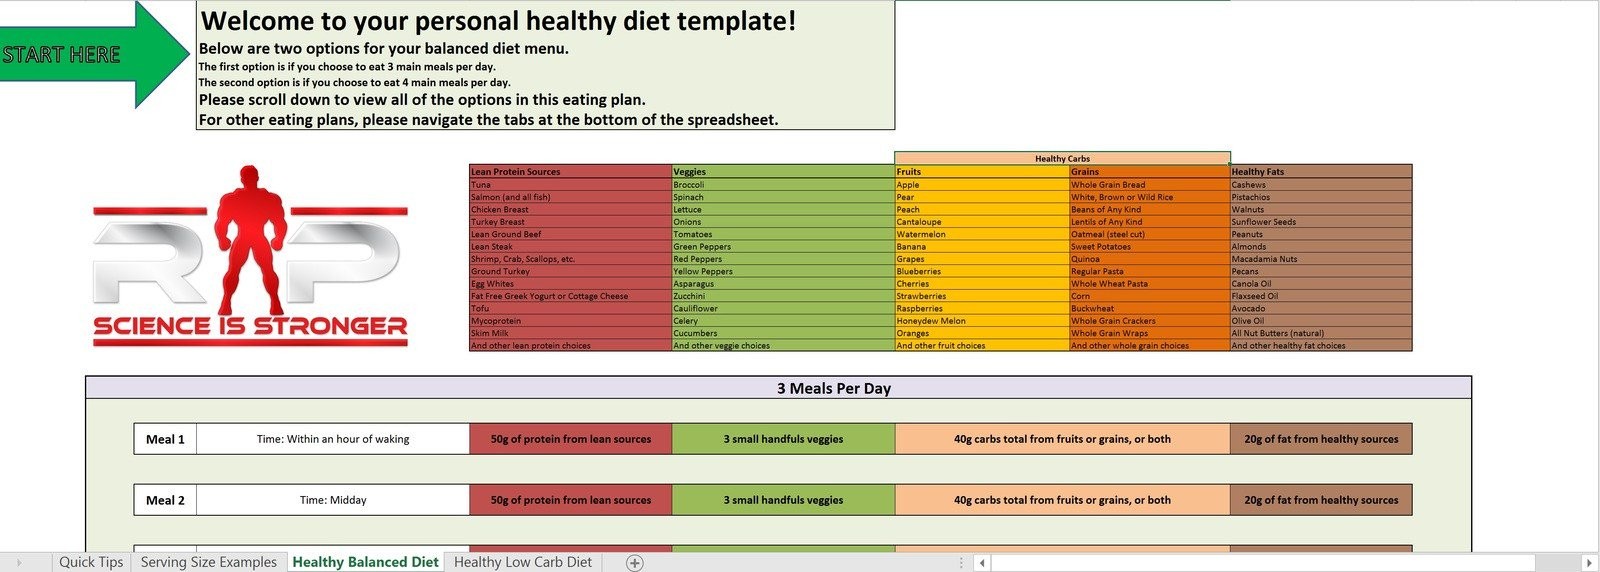 Renaissance Periodization Healthy Diet Templates Auto Download Free